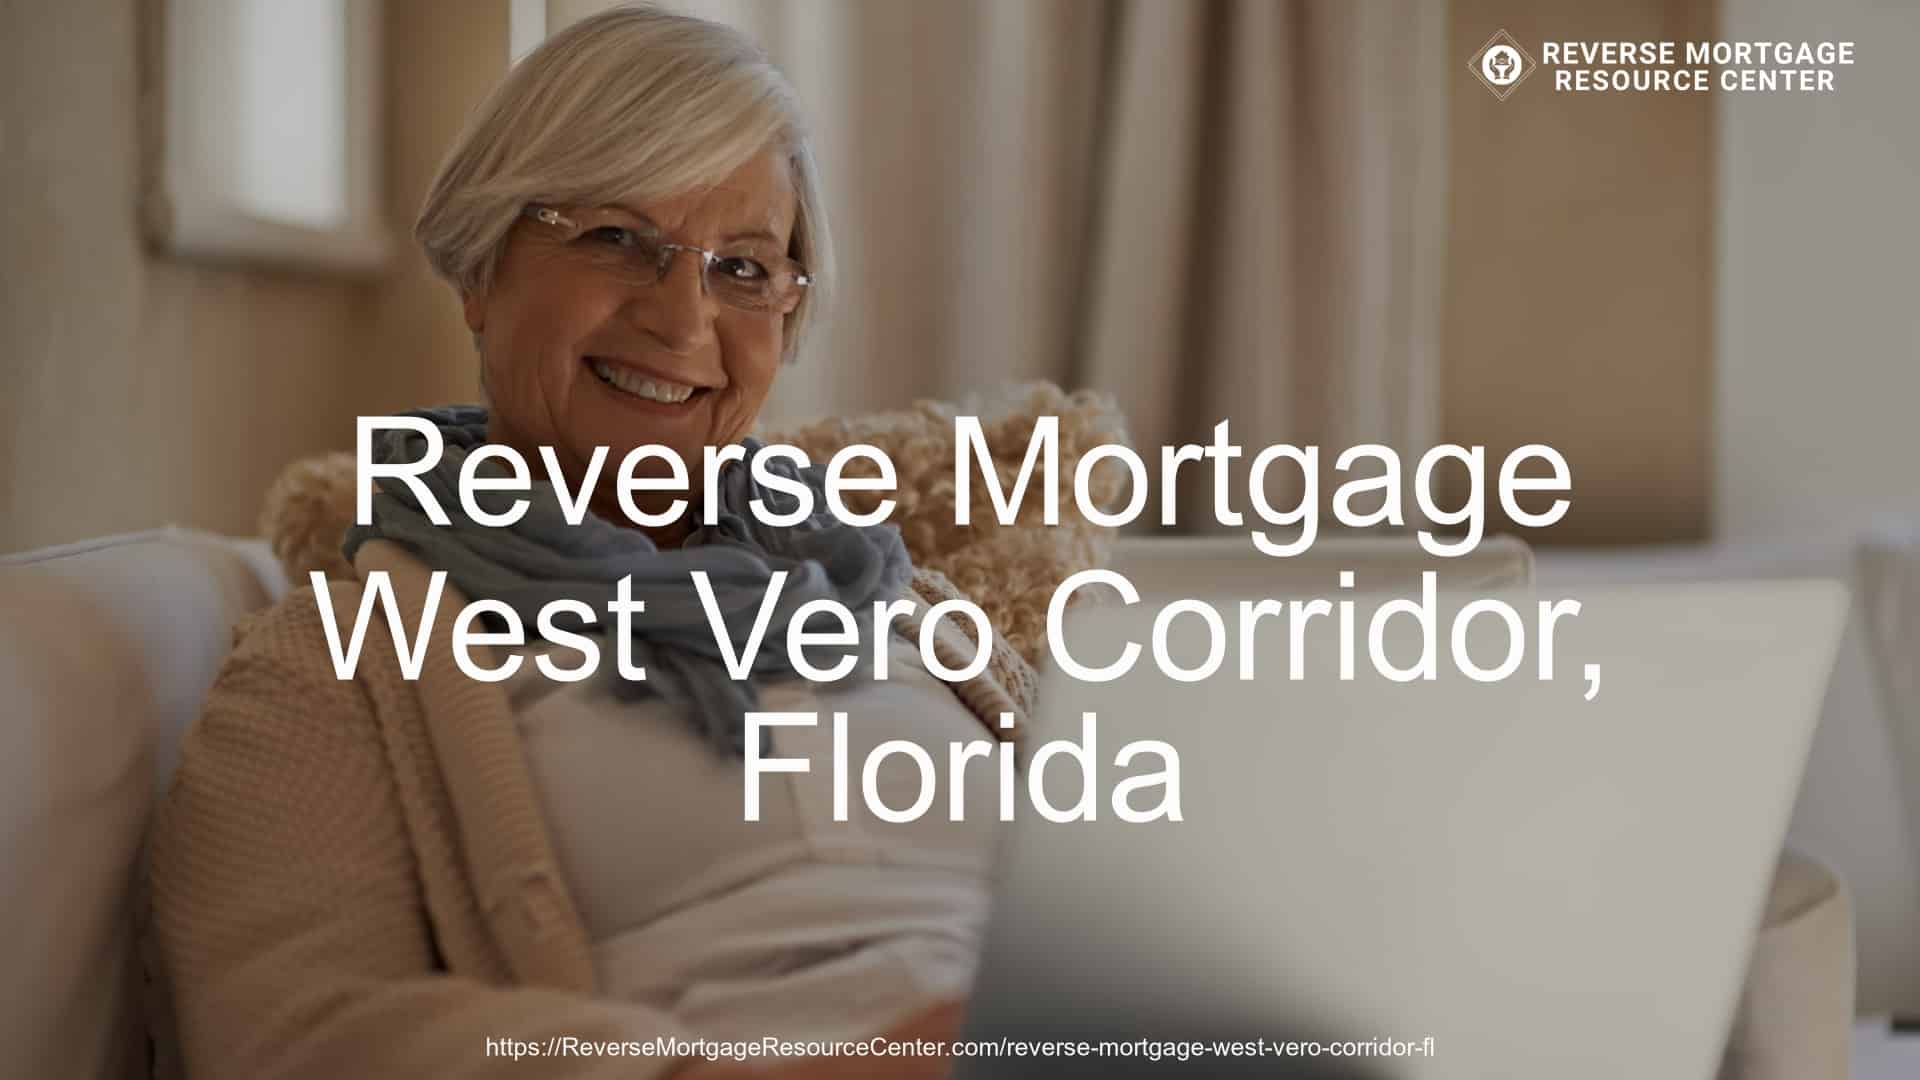 Reverse Mortgage in West Vero Corridor, FL